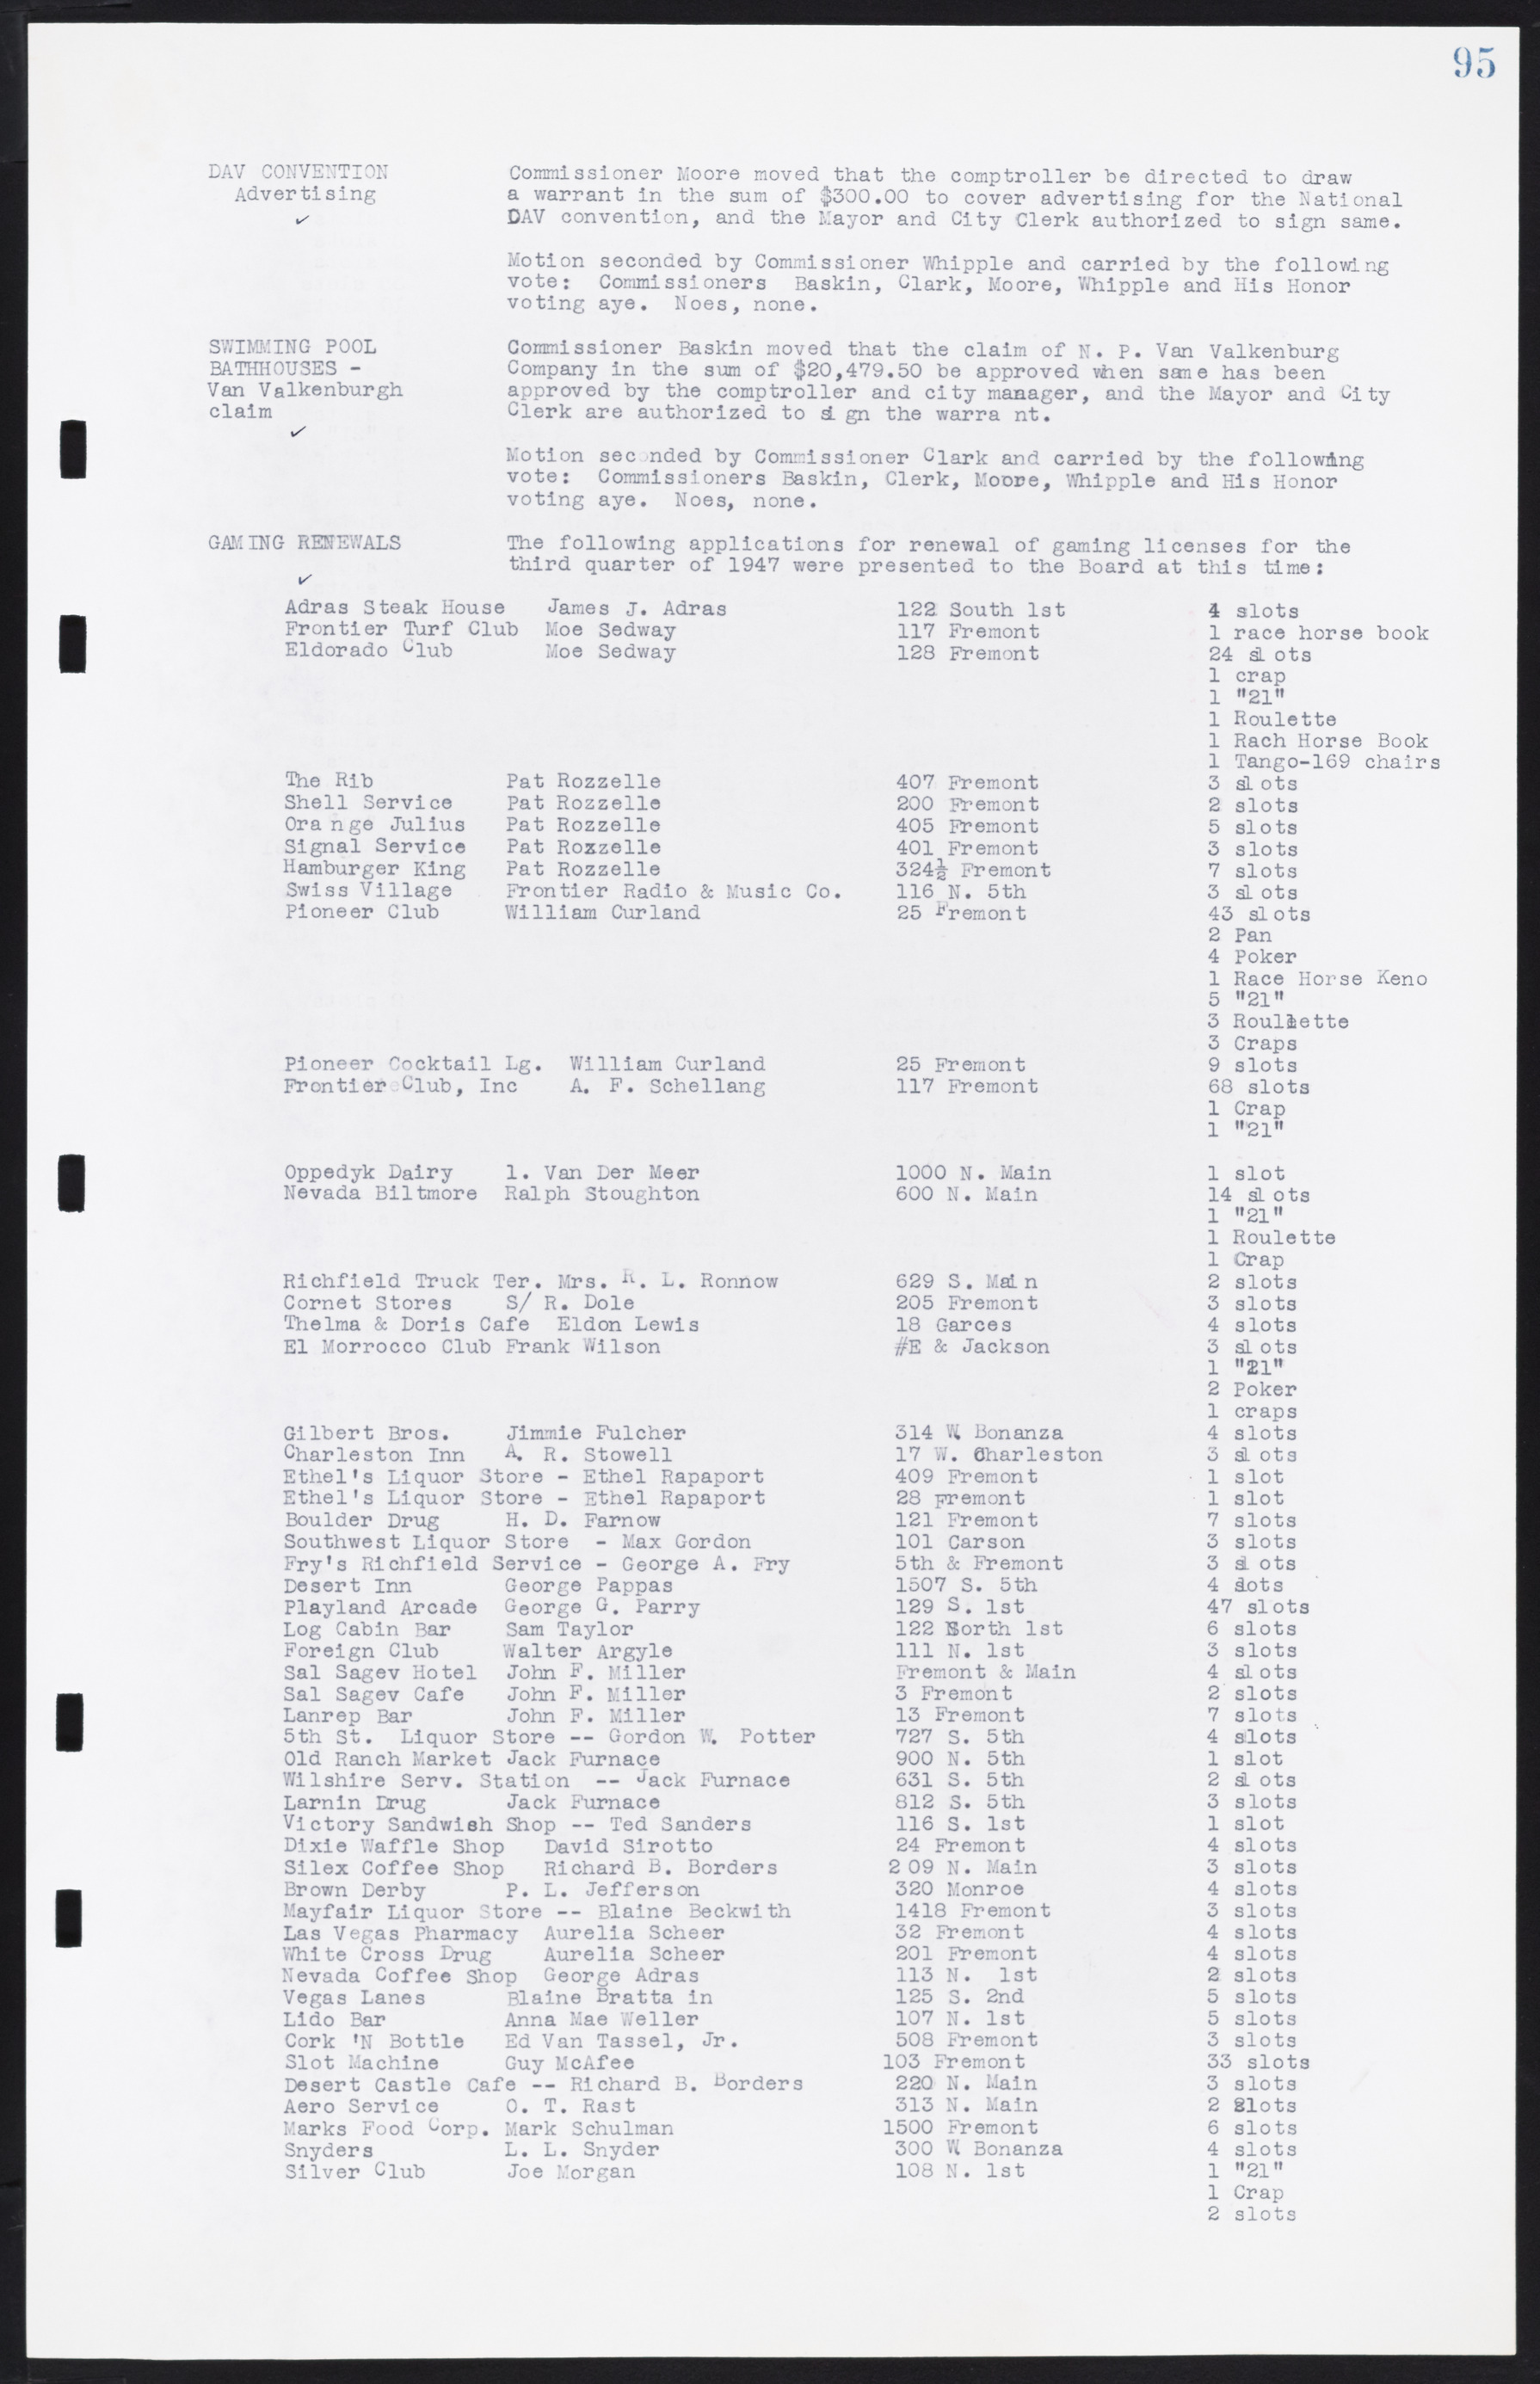 Las Vegas City Commission Minutes, January 7, 1947 to October 26, 1949, lvc000006-110